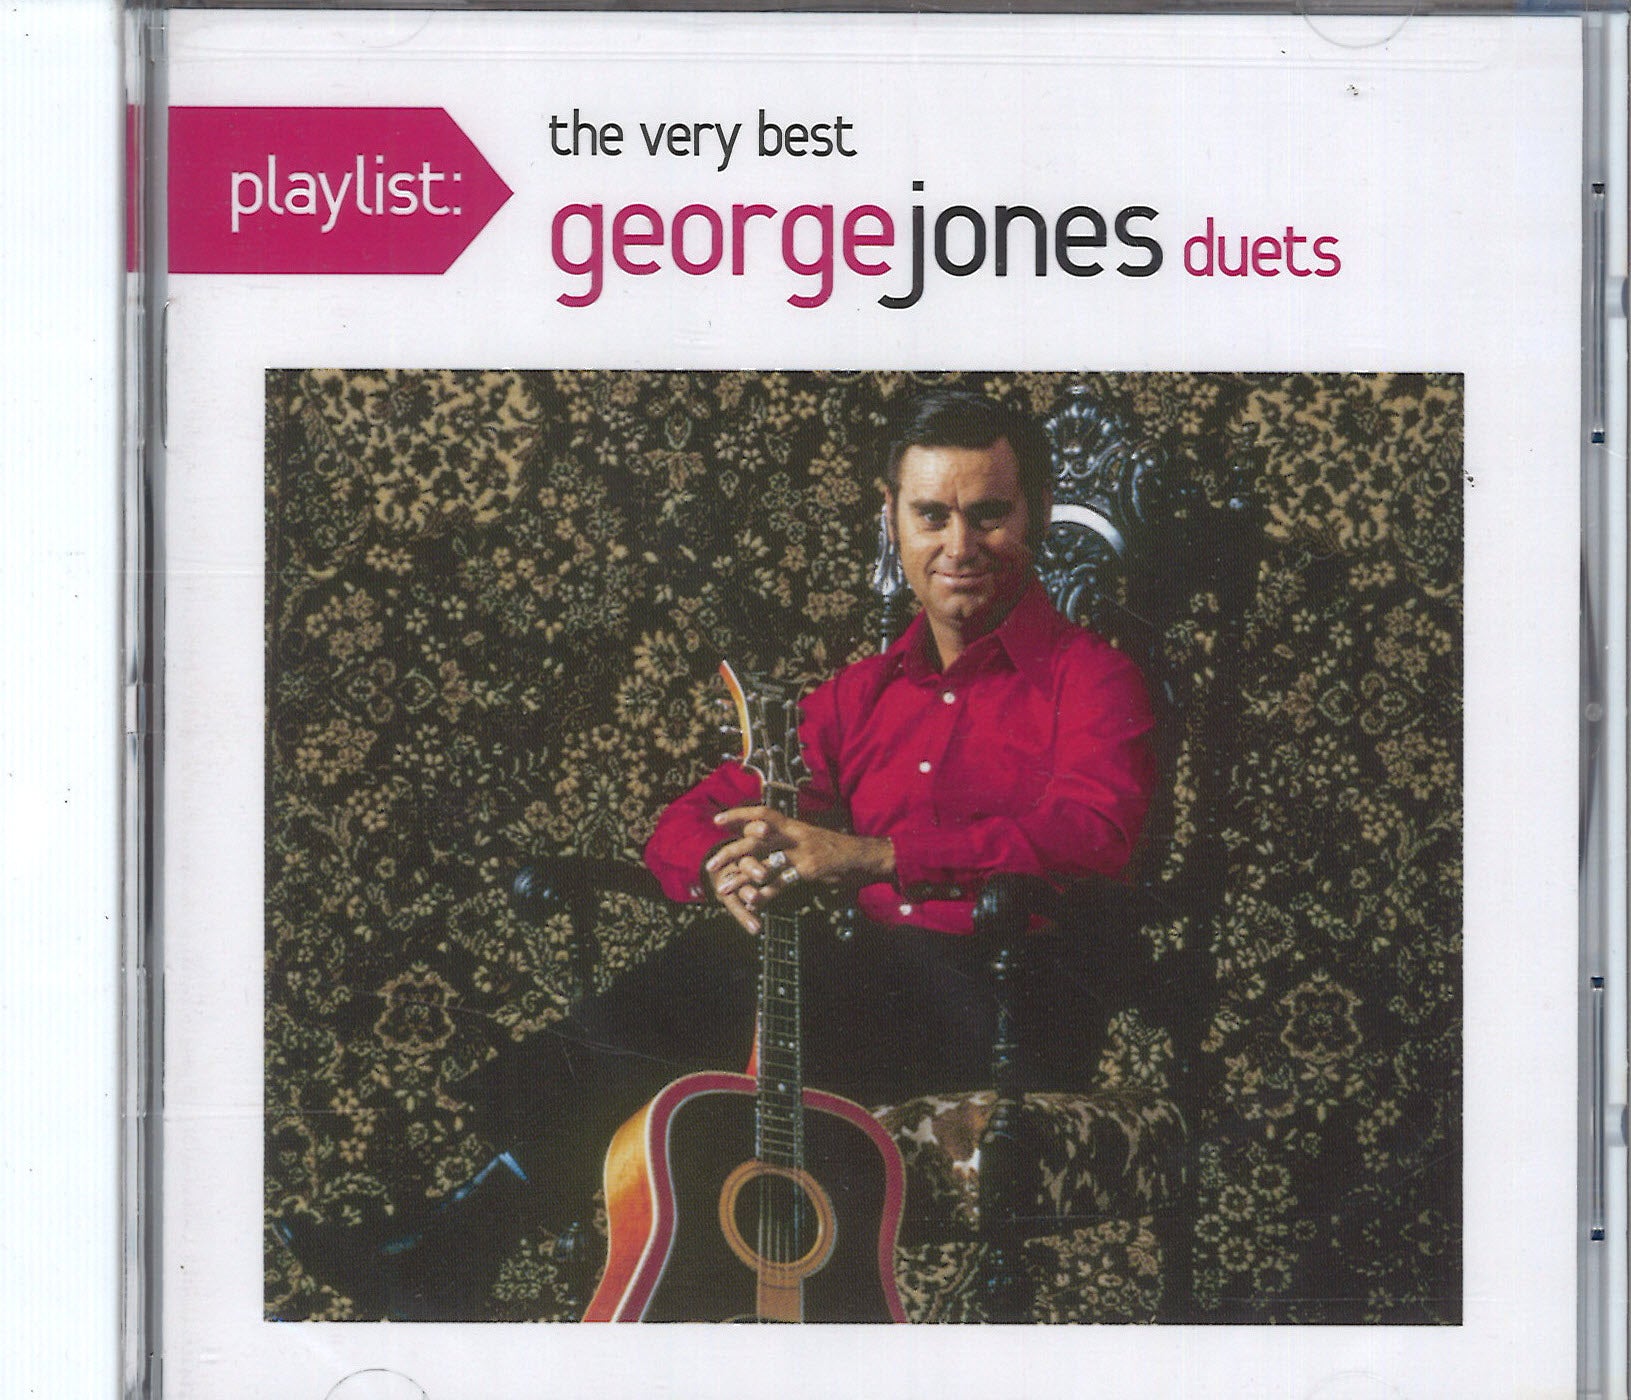 Playlist: The Very Best of George Jones Duets